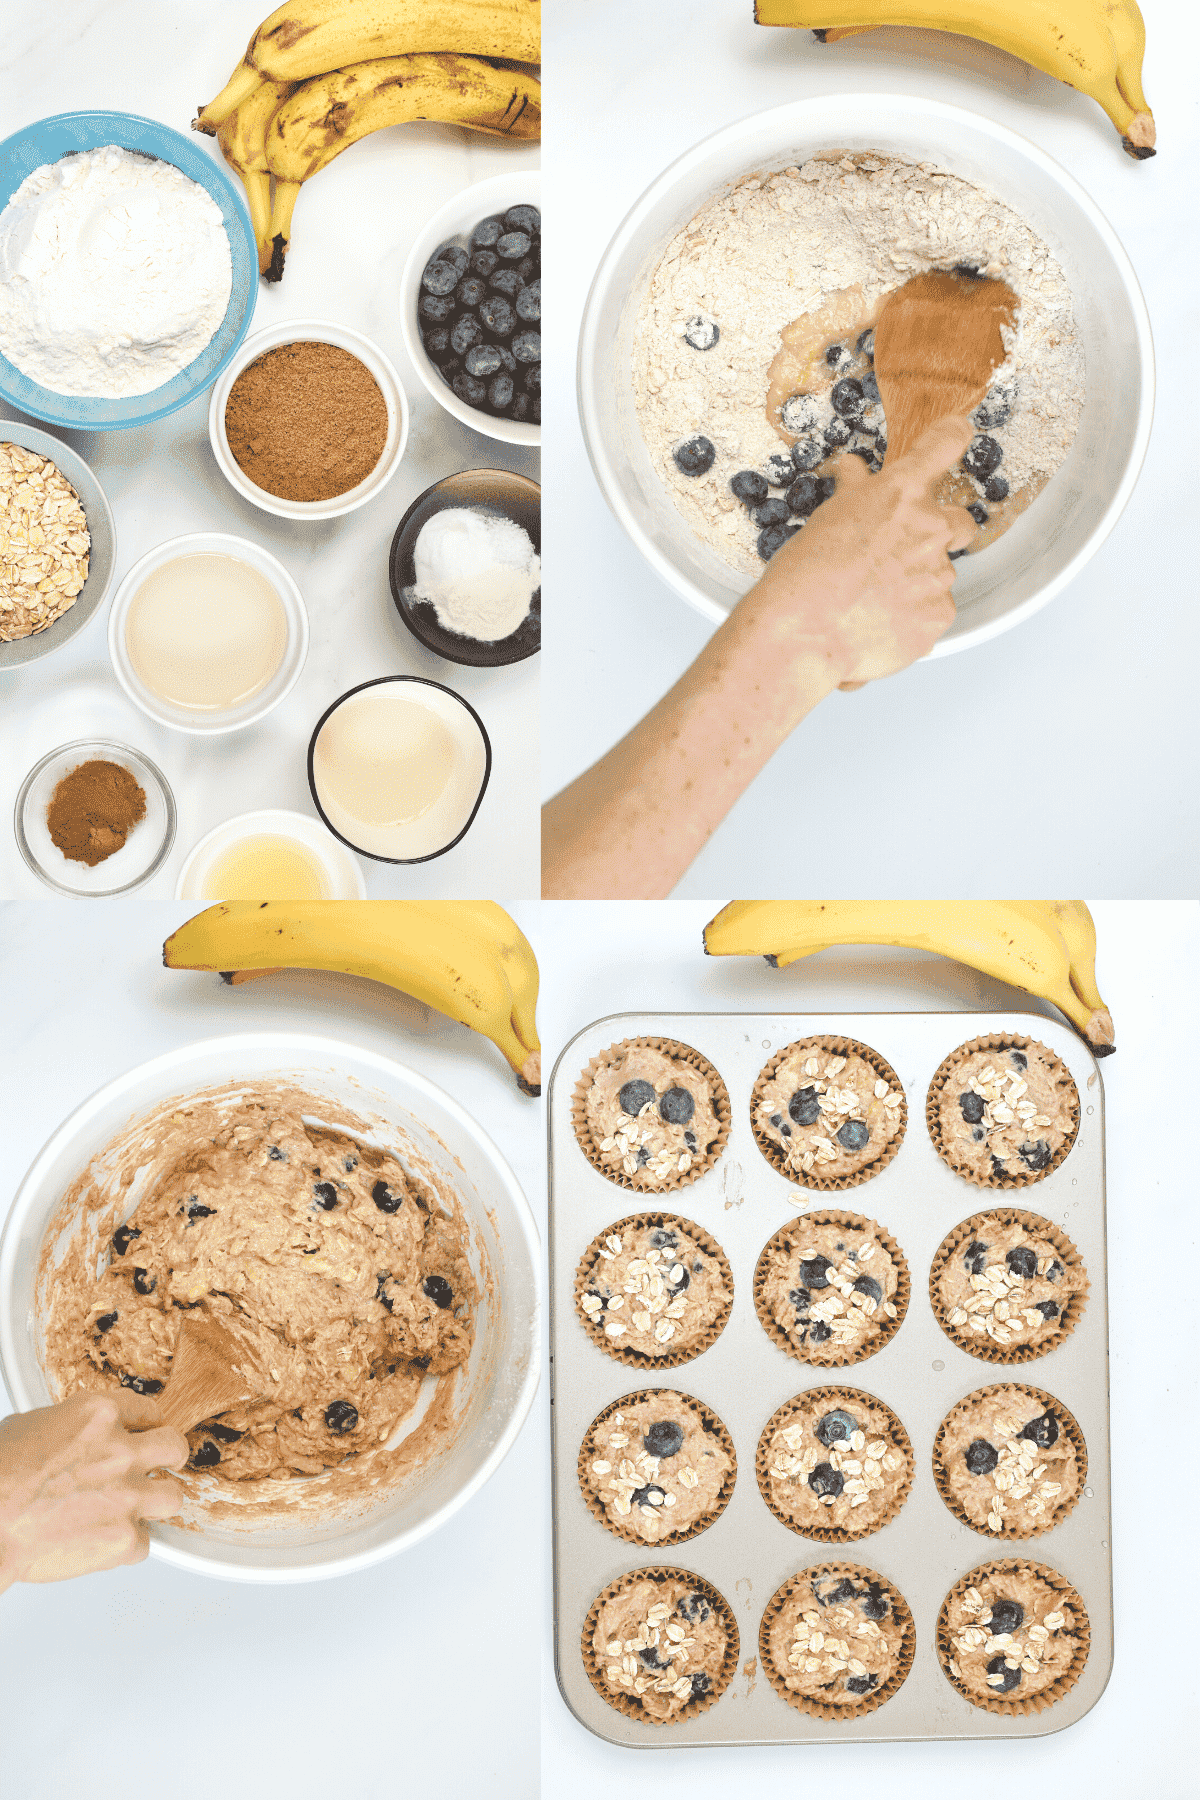 How to make Banana Blueberry Oatmeal Muffins